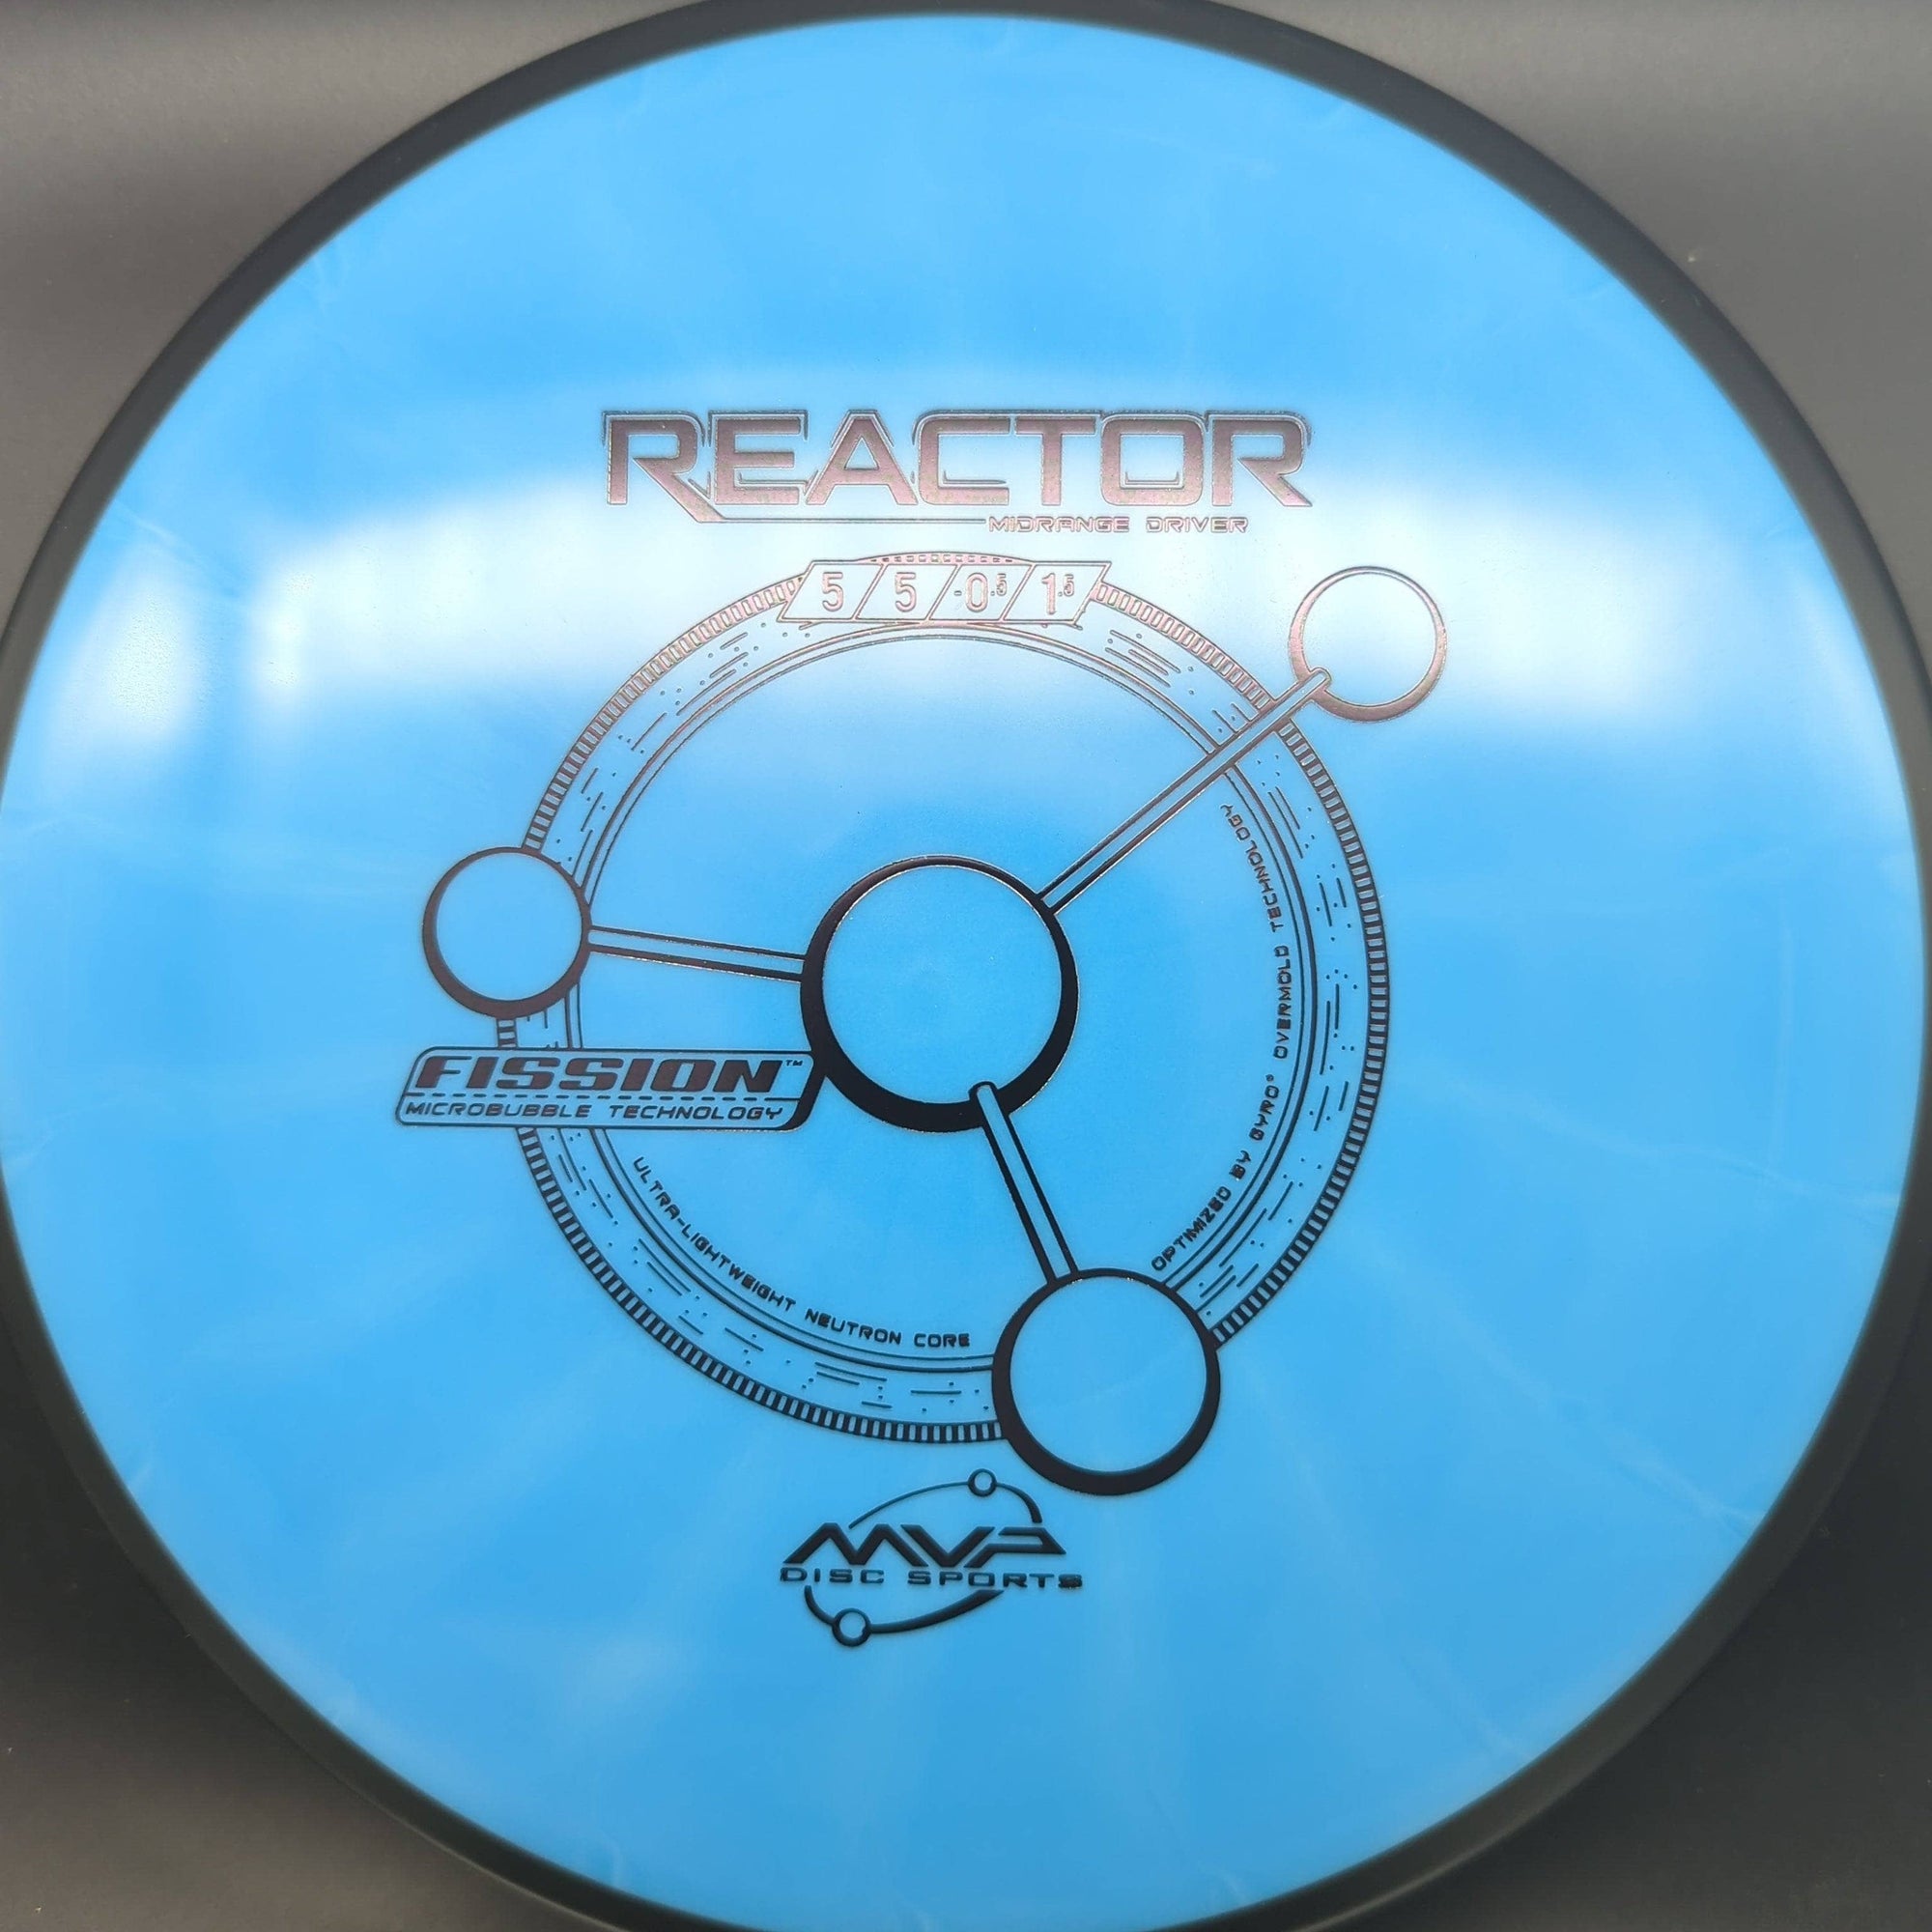 MVP Mid Range Blue 172g Reactor, Fission